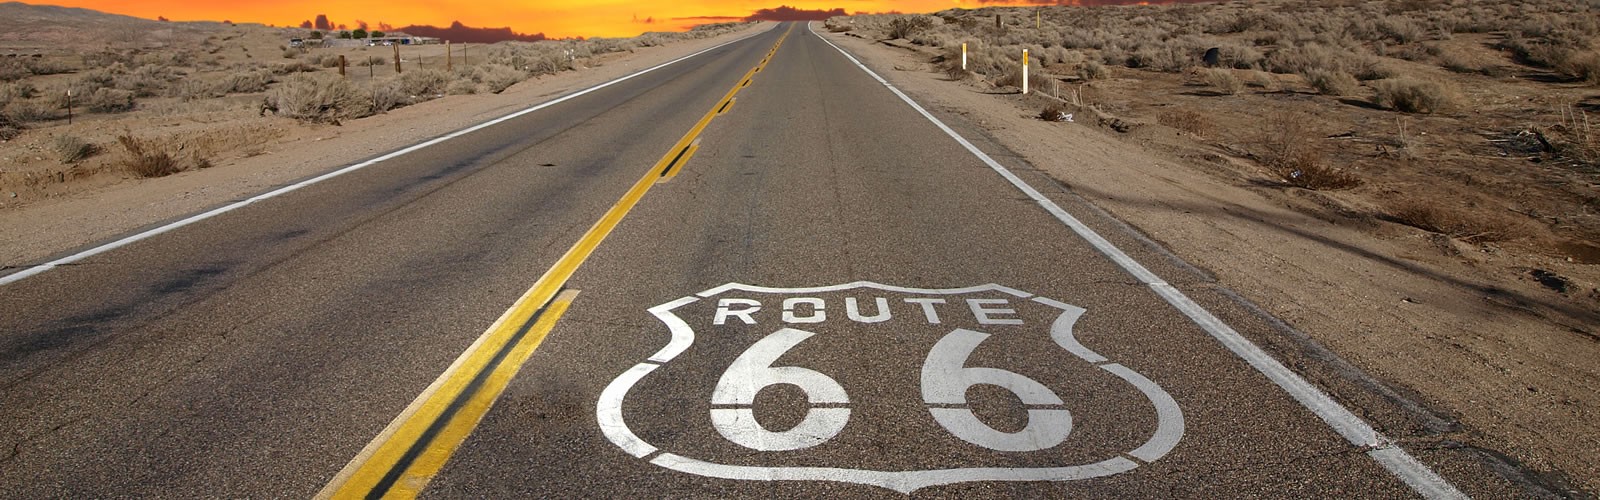 header-route-66